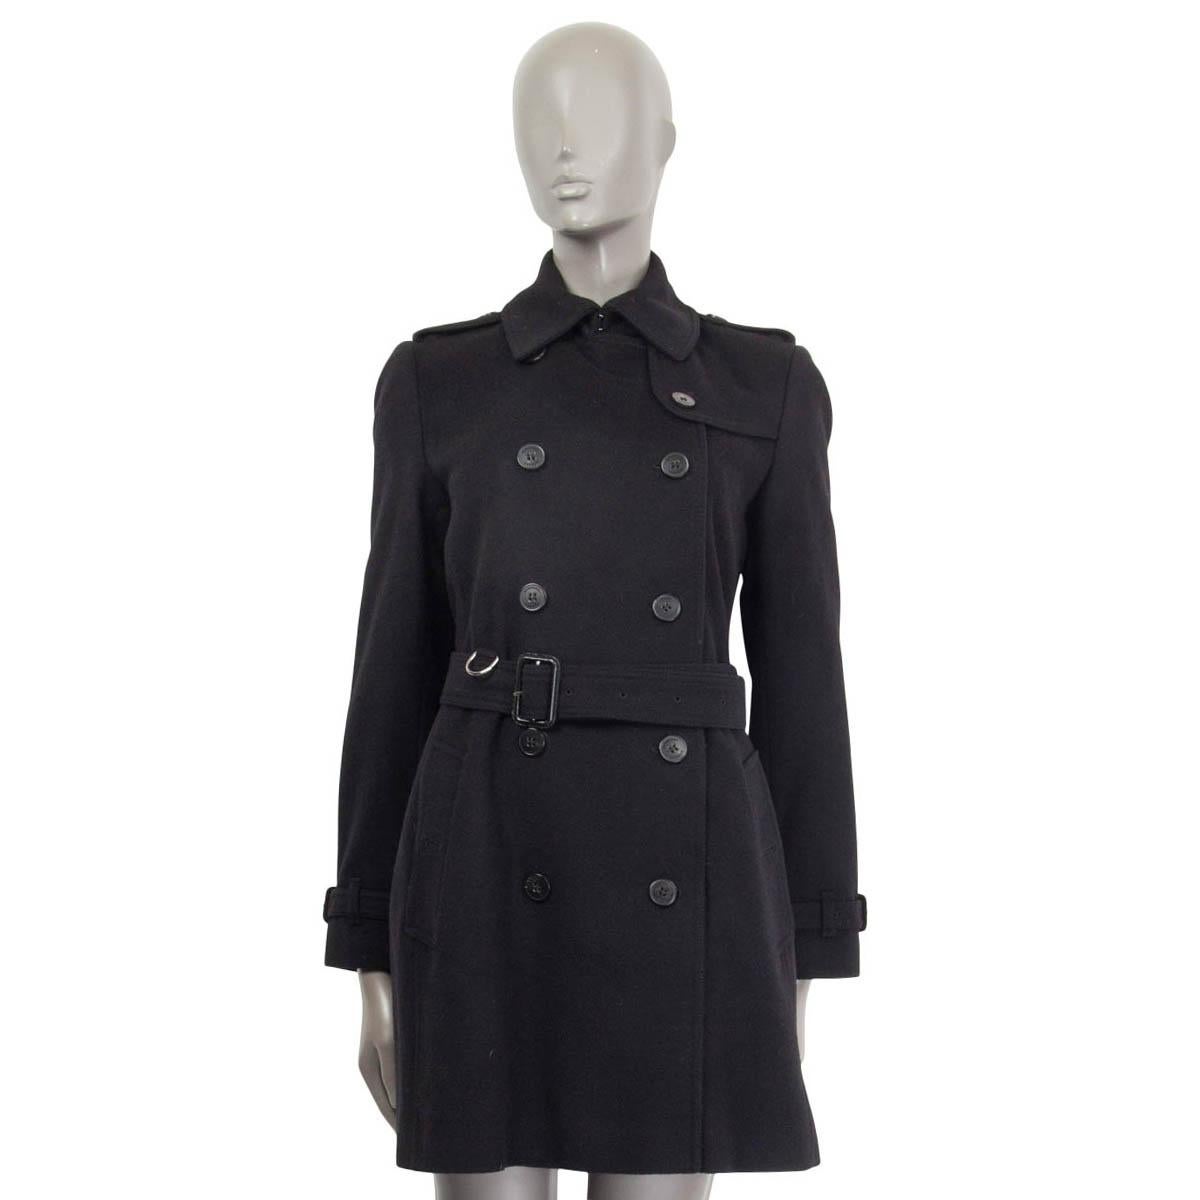 Black BURBERRY black wool & cashmere KENSINGTON BELTED TRENCH Coat Jacket 8 S